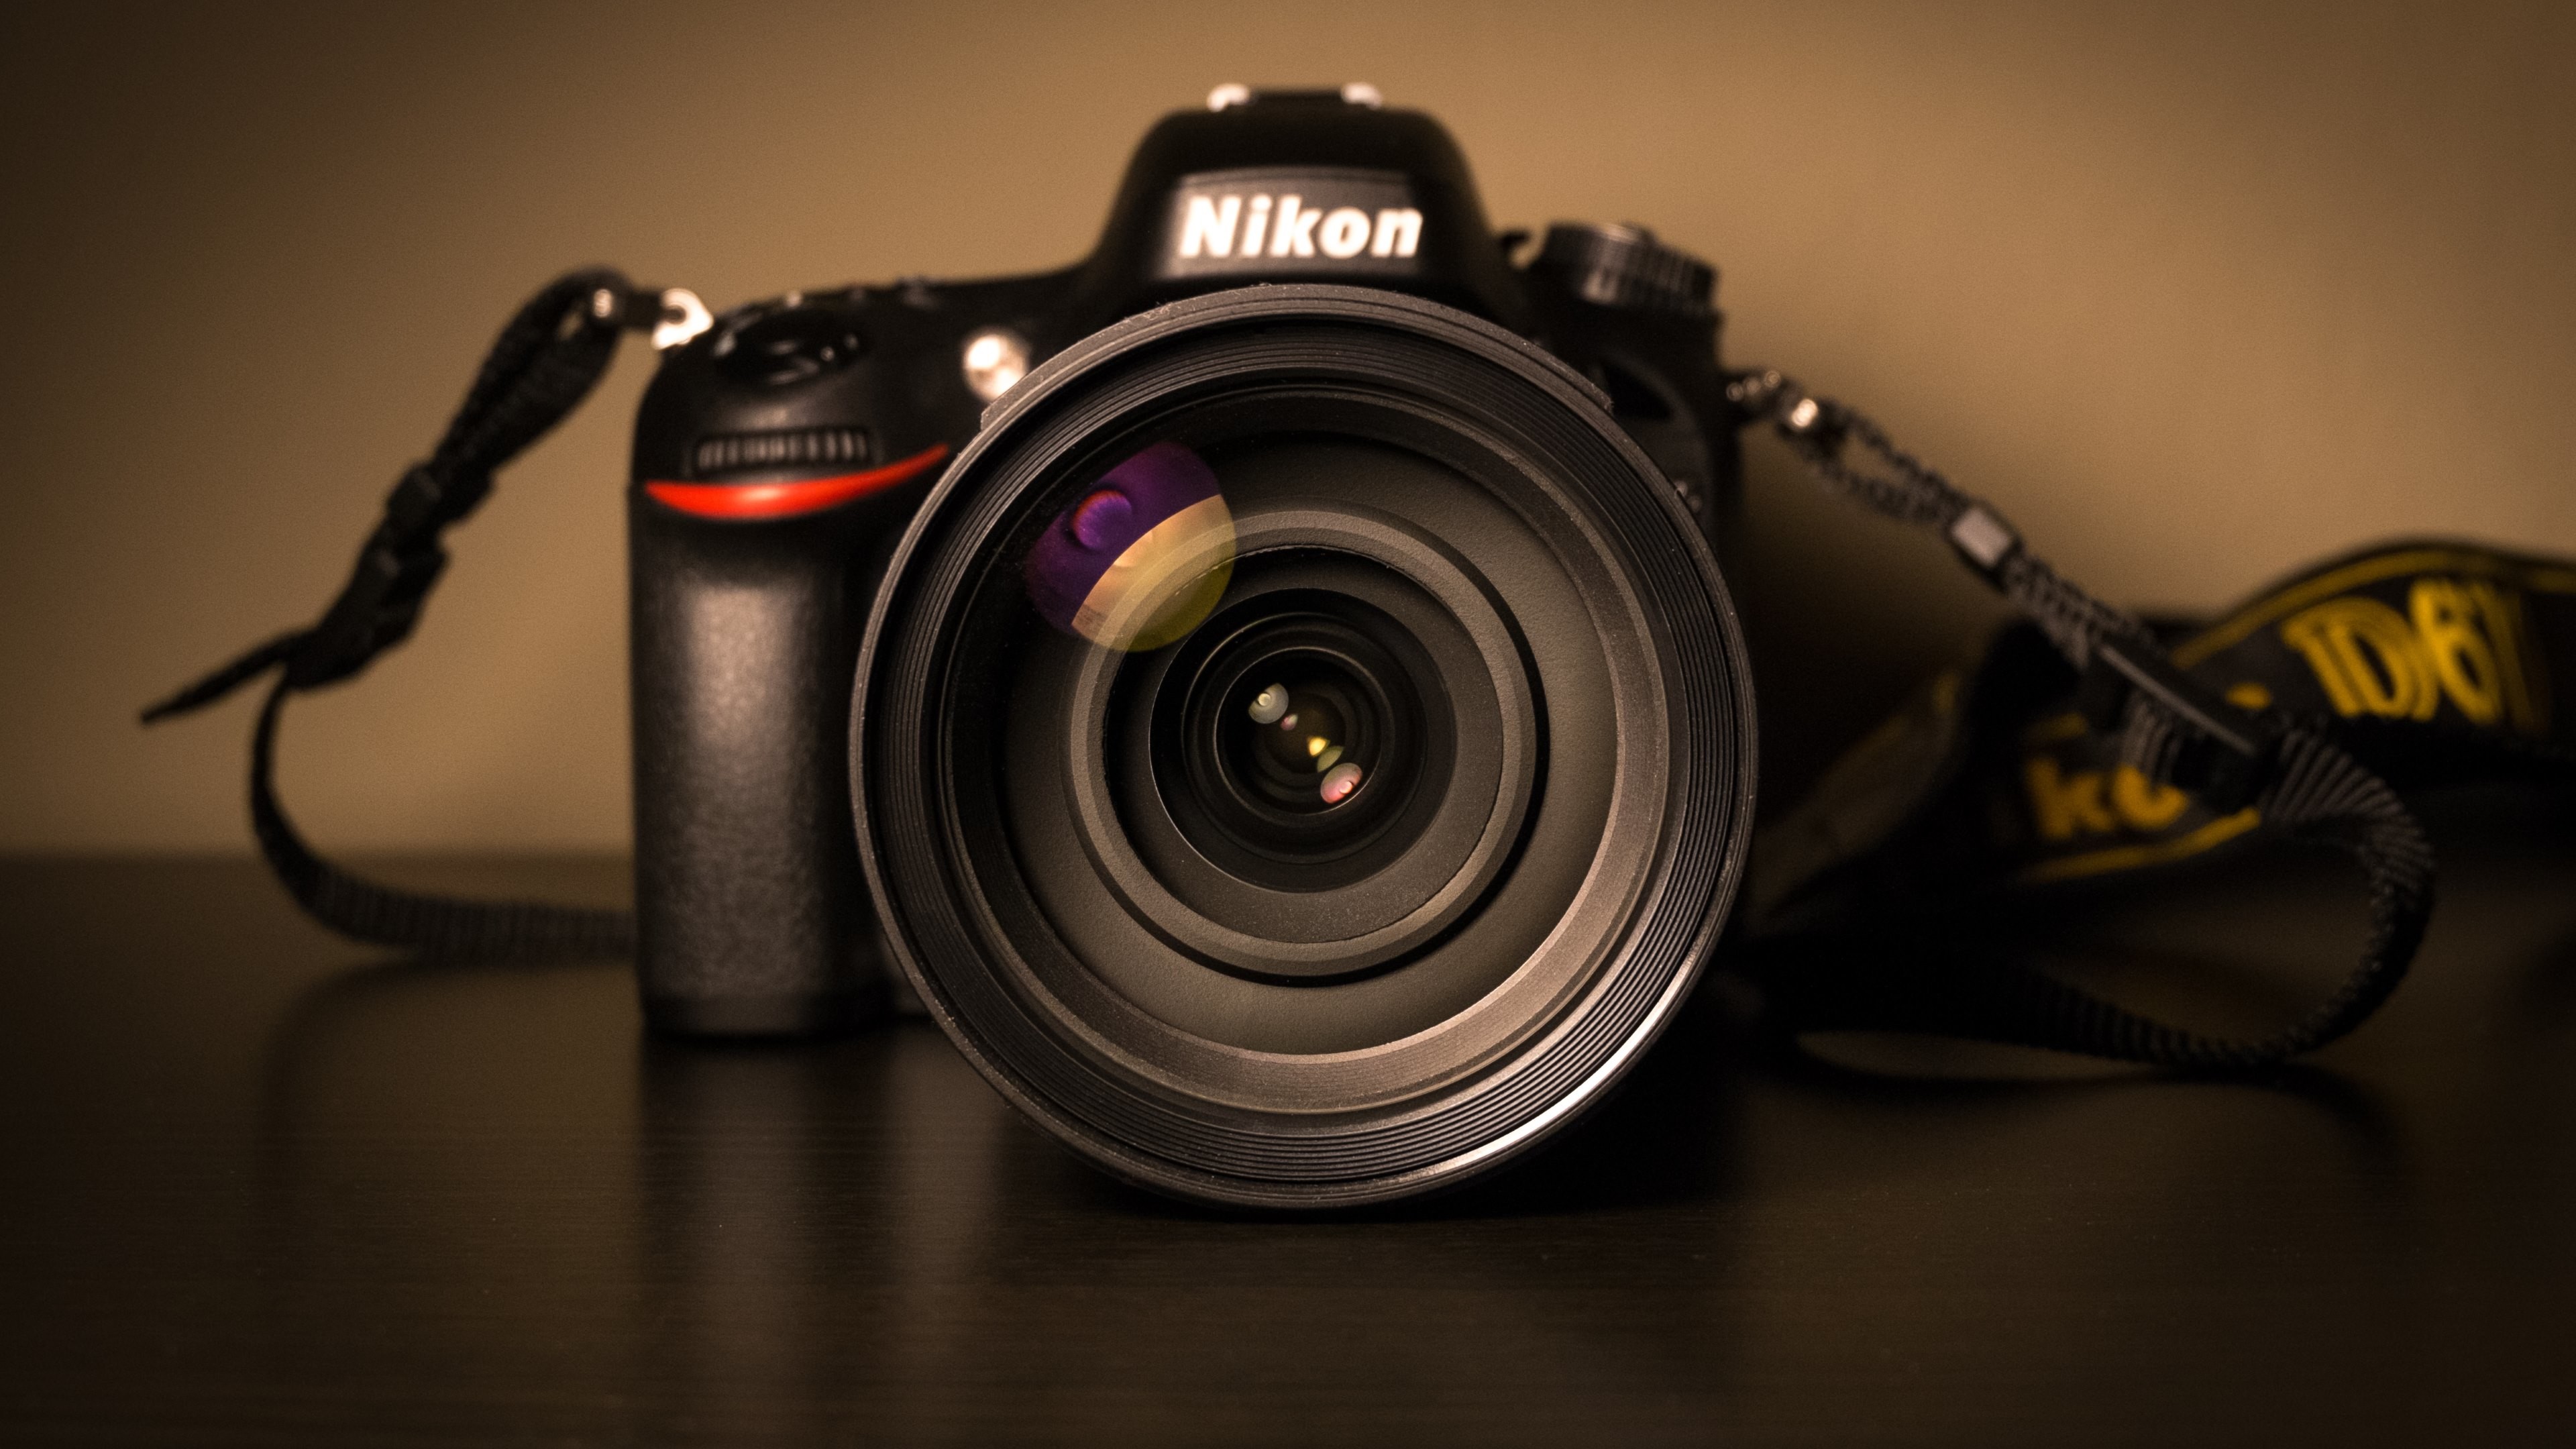 3840x2160 Wallpaper: Nikon DSLR Camera. Ultra HD 4K 